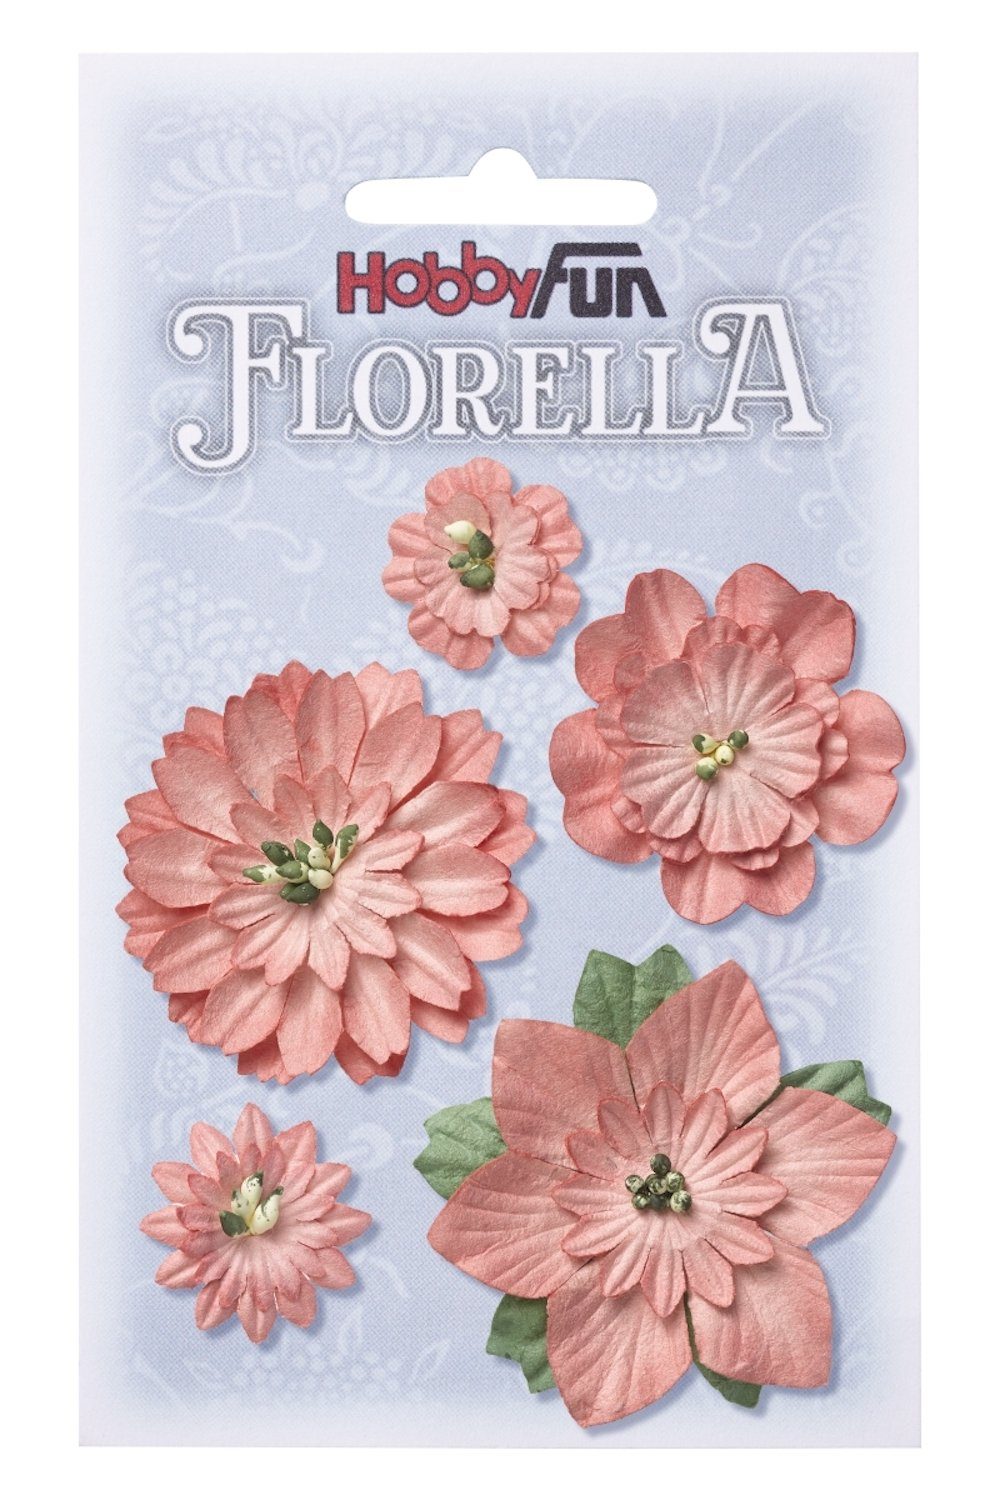 sort. cm Maulbeer-Papier HobbyFun 5 FLORELLA-Blüten - 2 aus Dekofigur